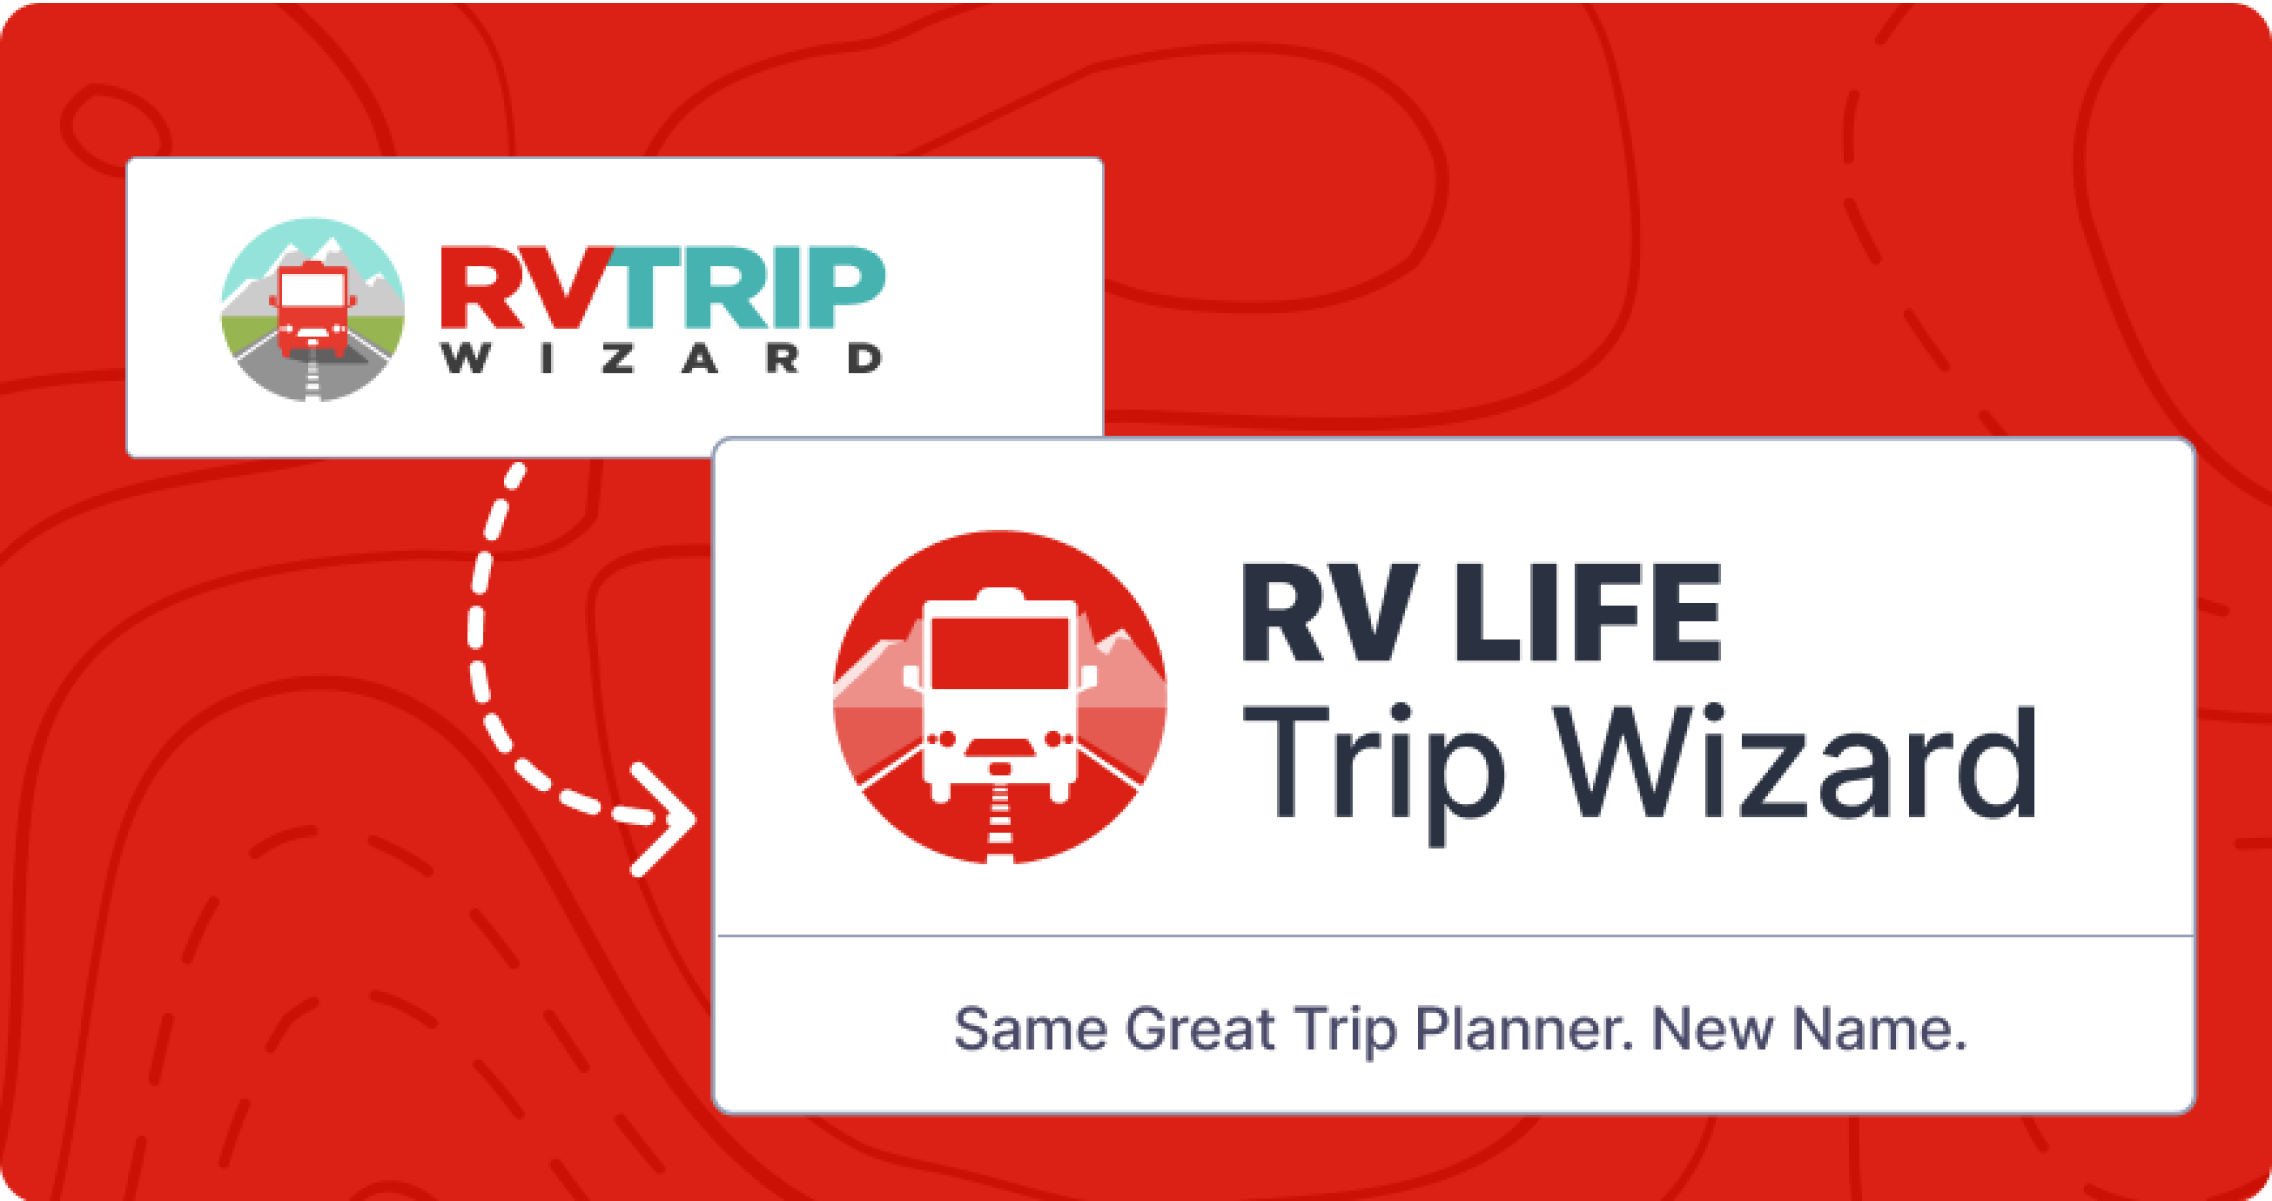 RV LIFE Trip Wizard logo